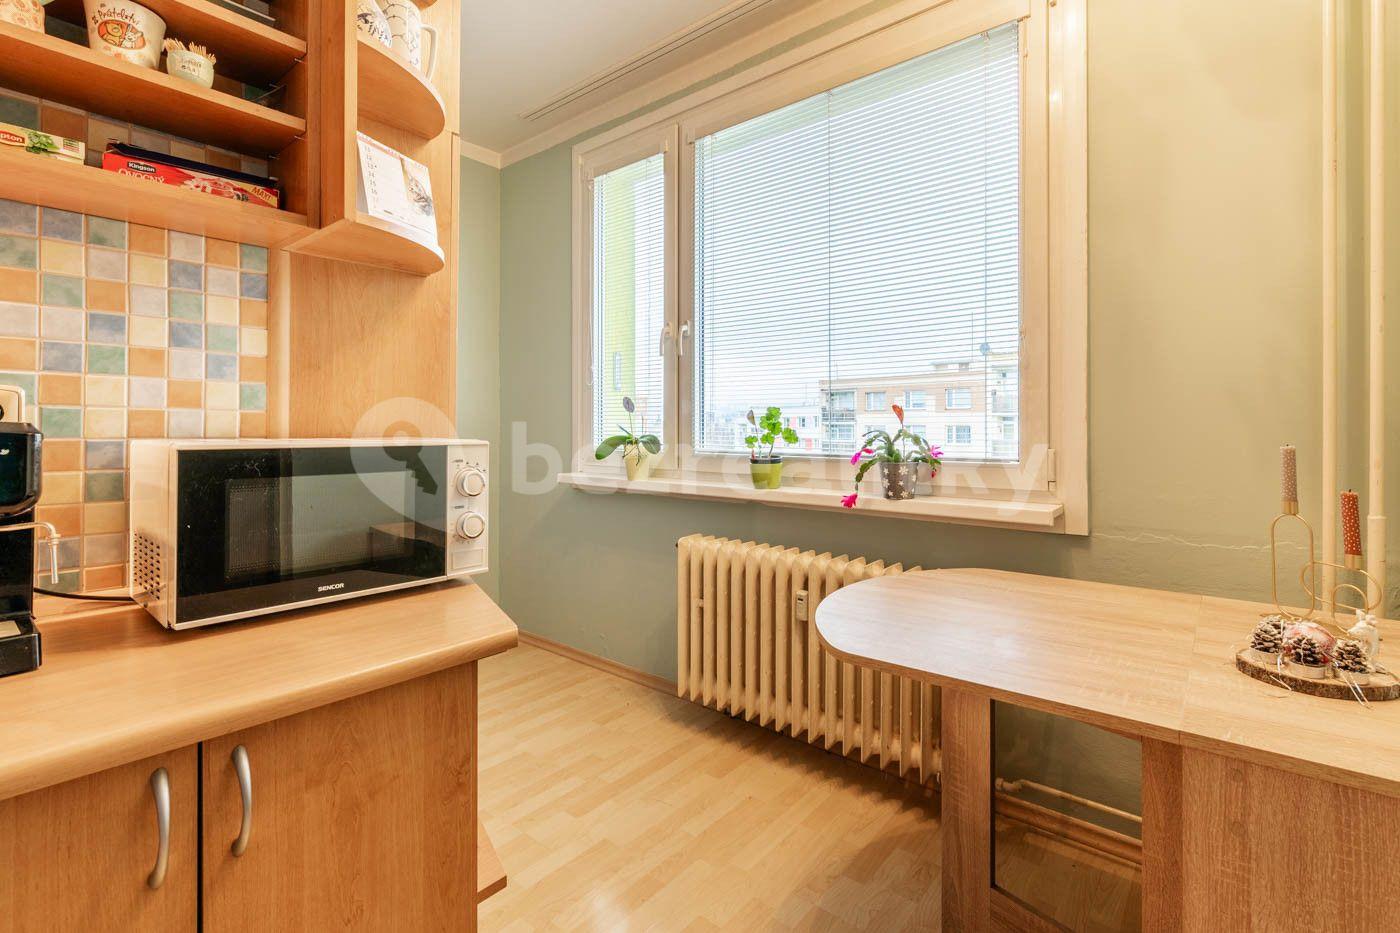 Predaj bytu 3-izbový 66 m², Lužická, Jablonec nad Nisou, Liberecký kraj